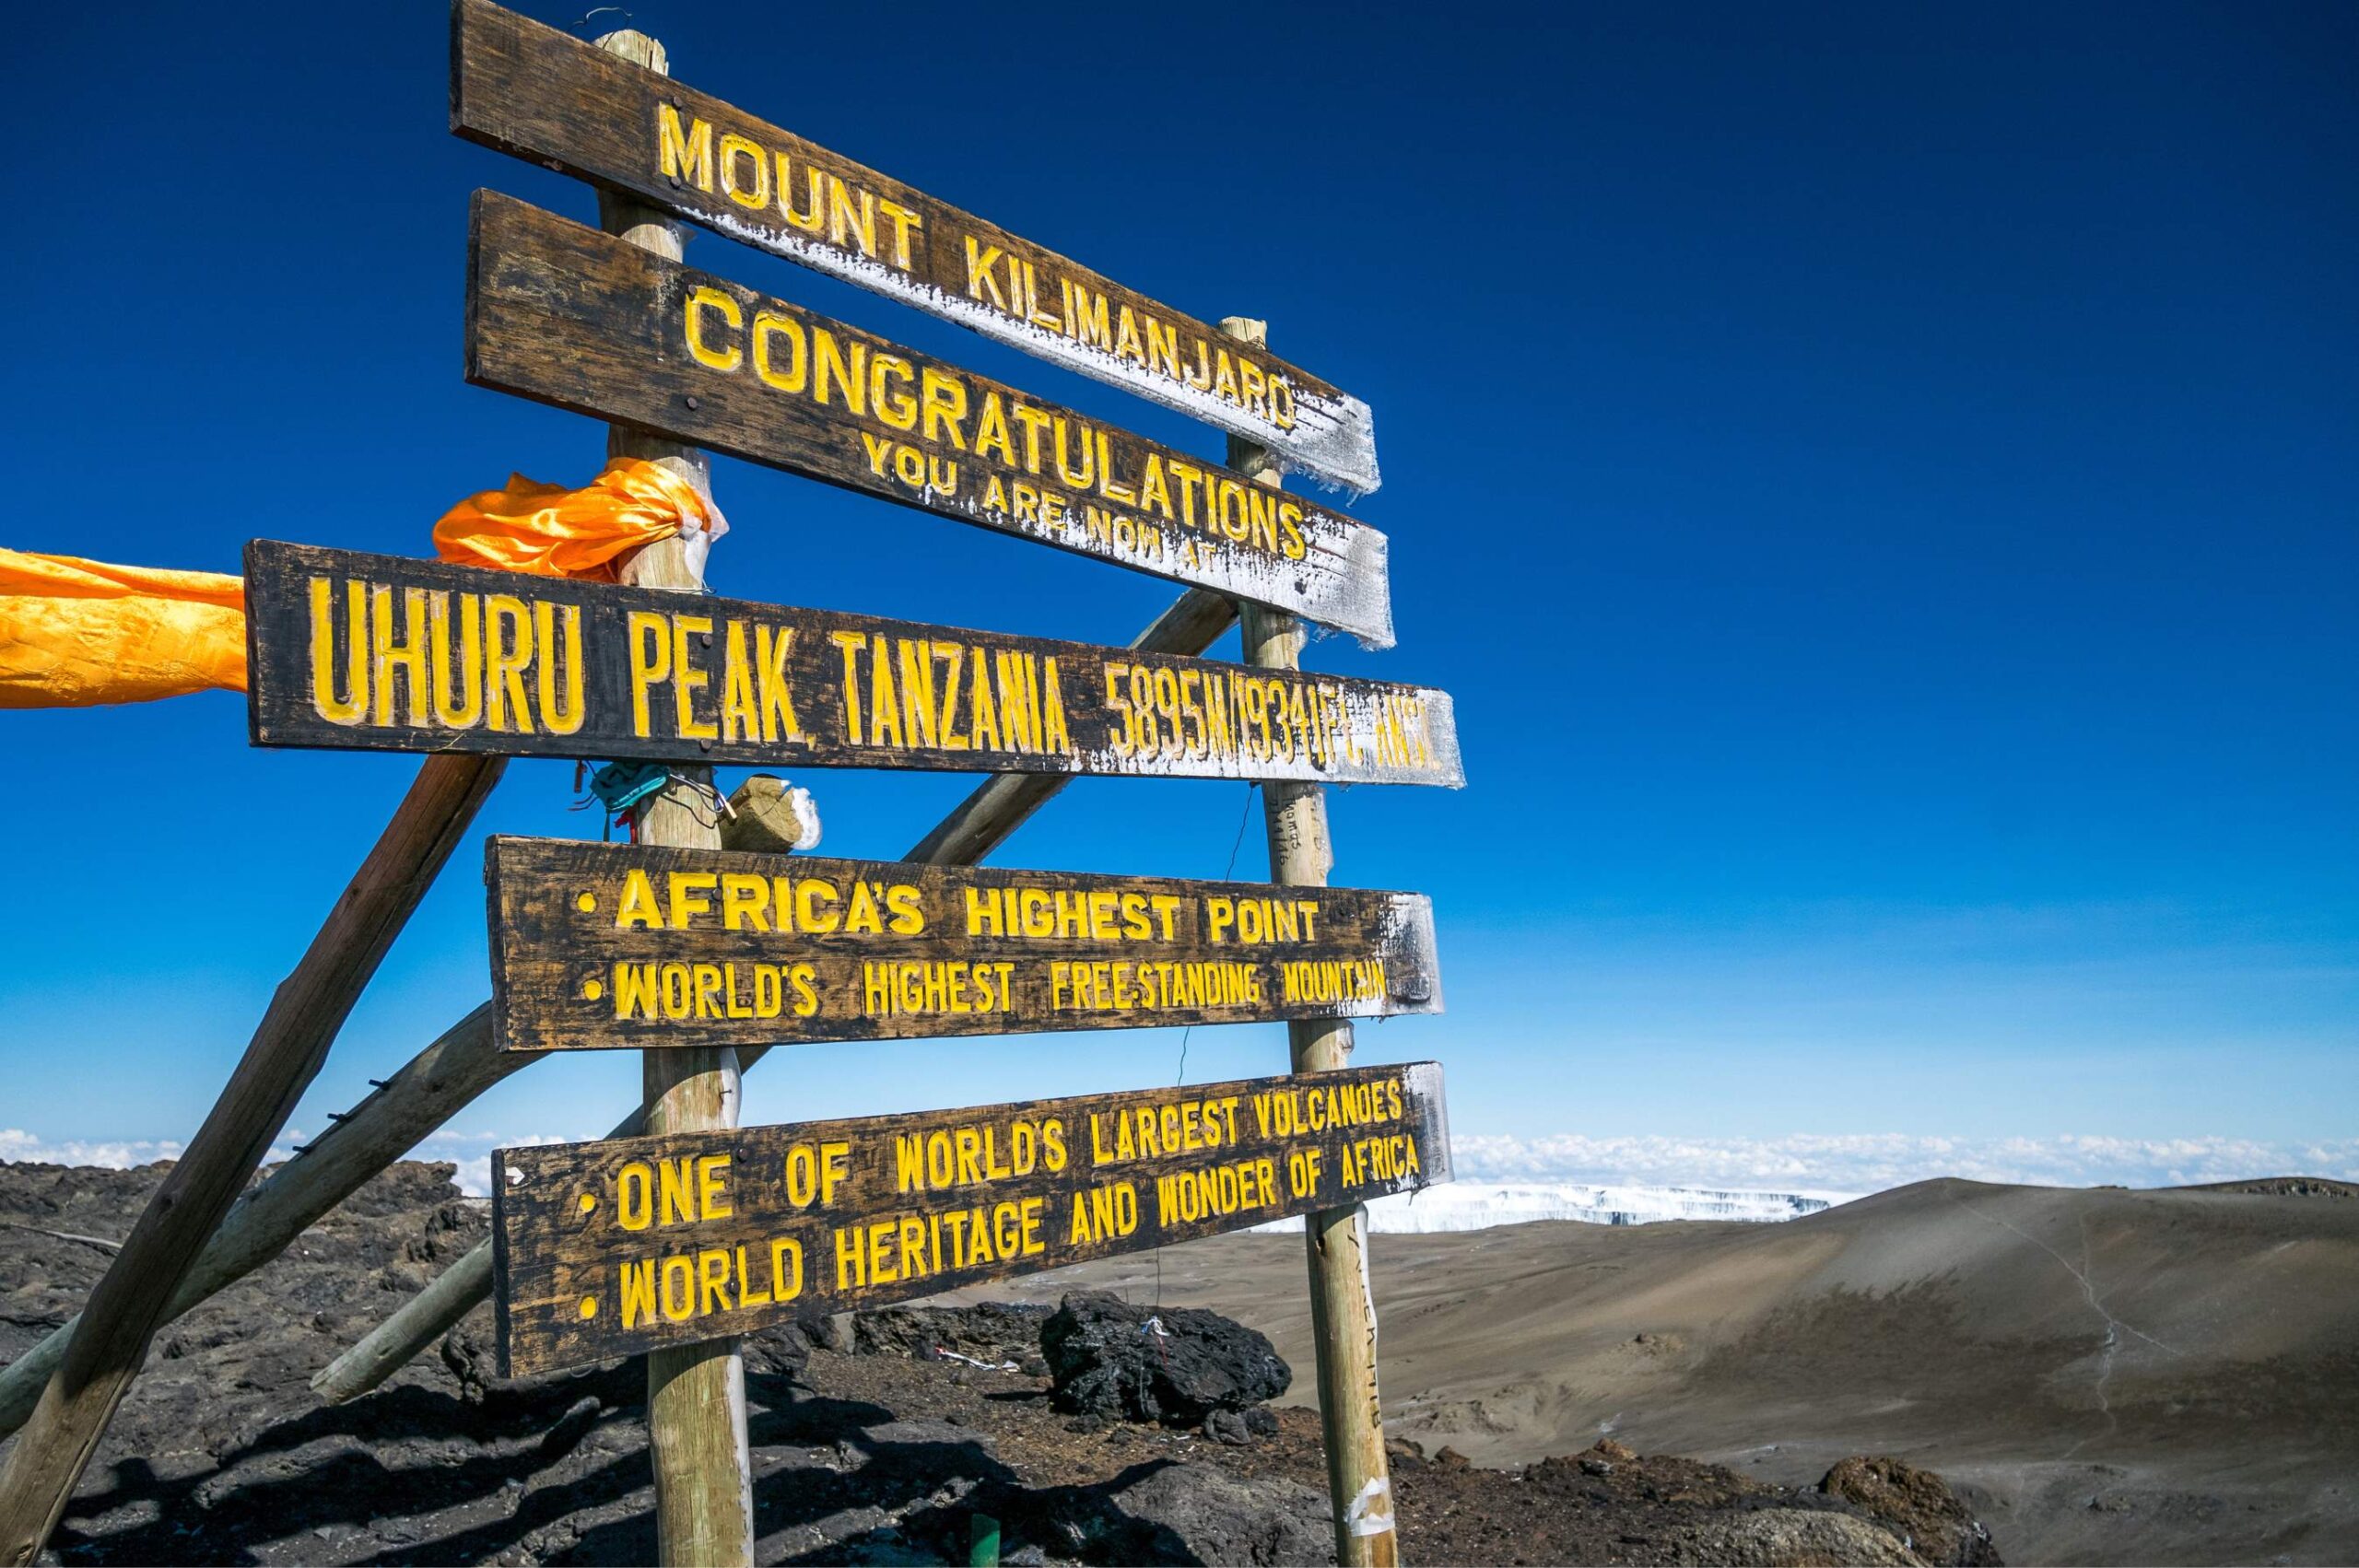 Ruta de Lemosho 7 días, día 6: Campamento Barafu (4640 m/ 15,223 ft) - Pico Uhuru (5895 m/ 19,340 ft) - Campamento Millennium (3820 m/ 12,532 ft)